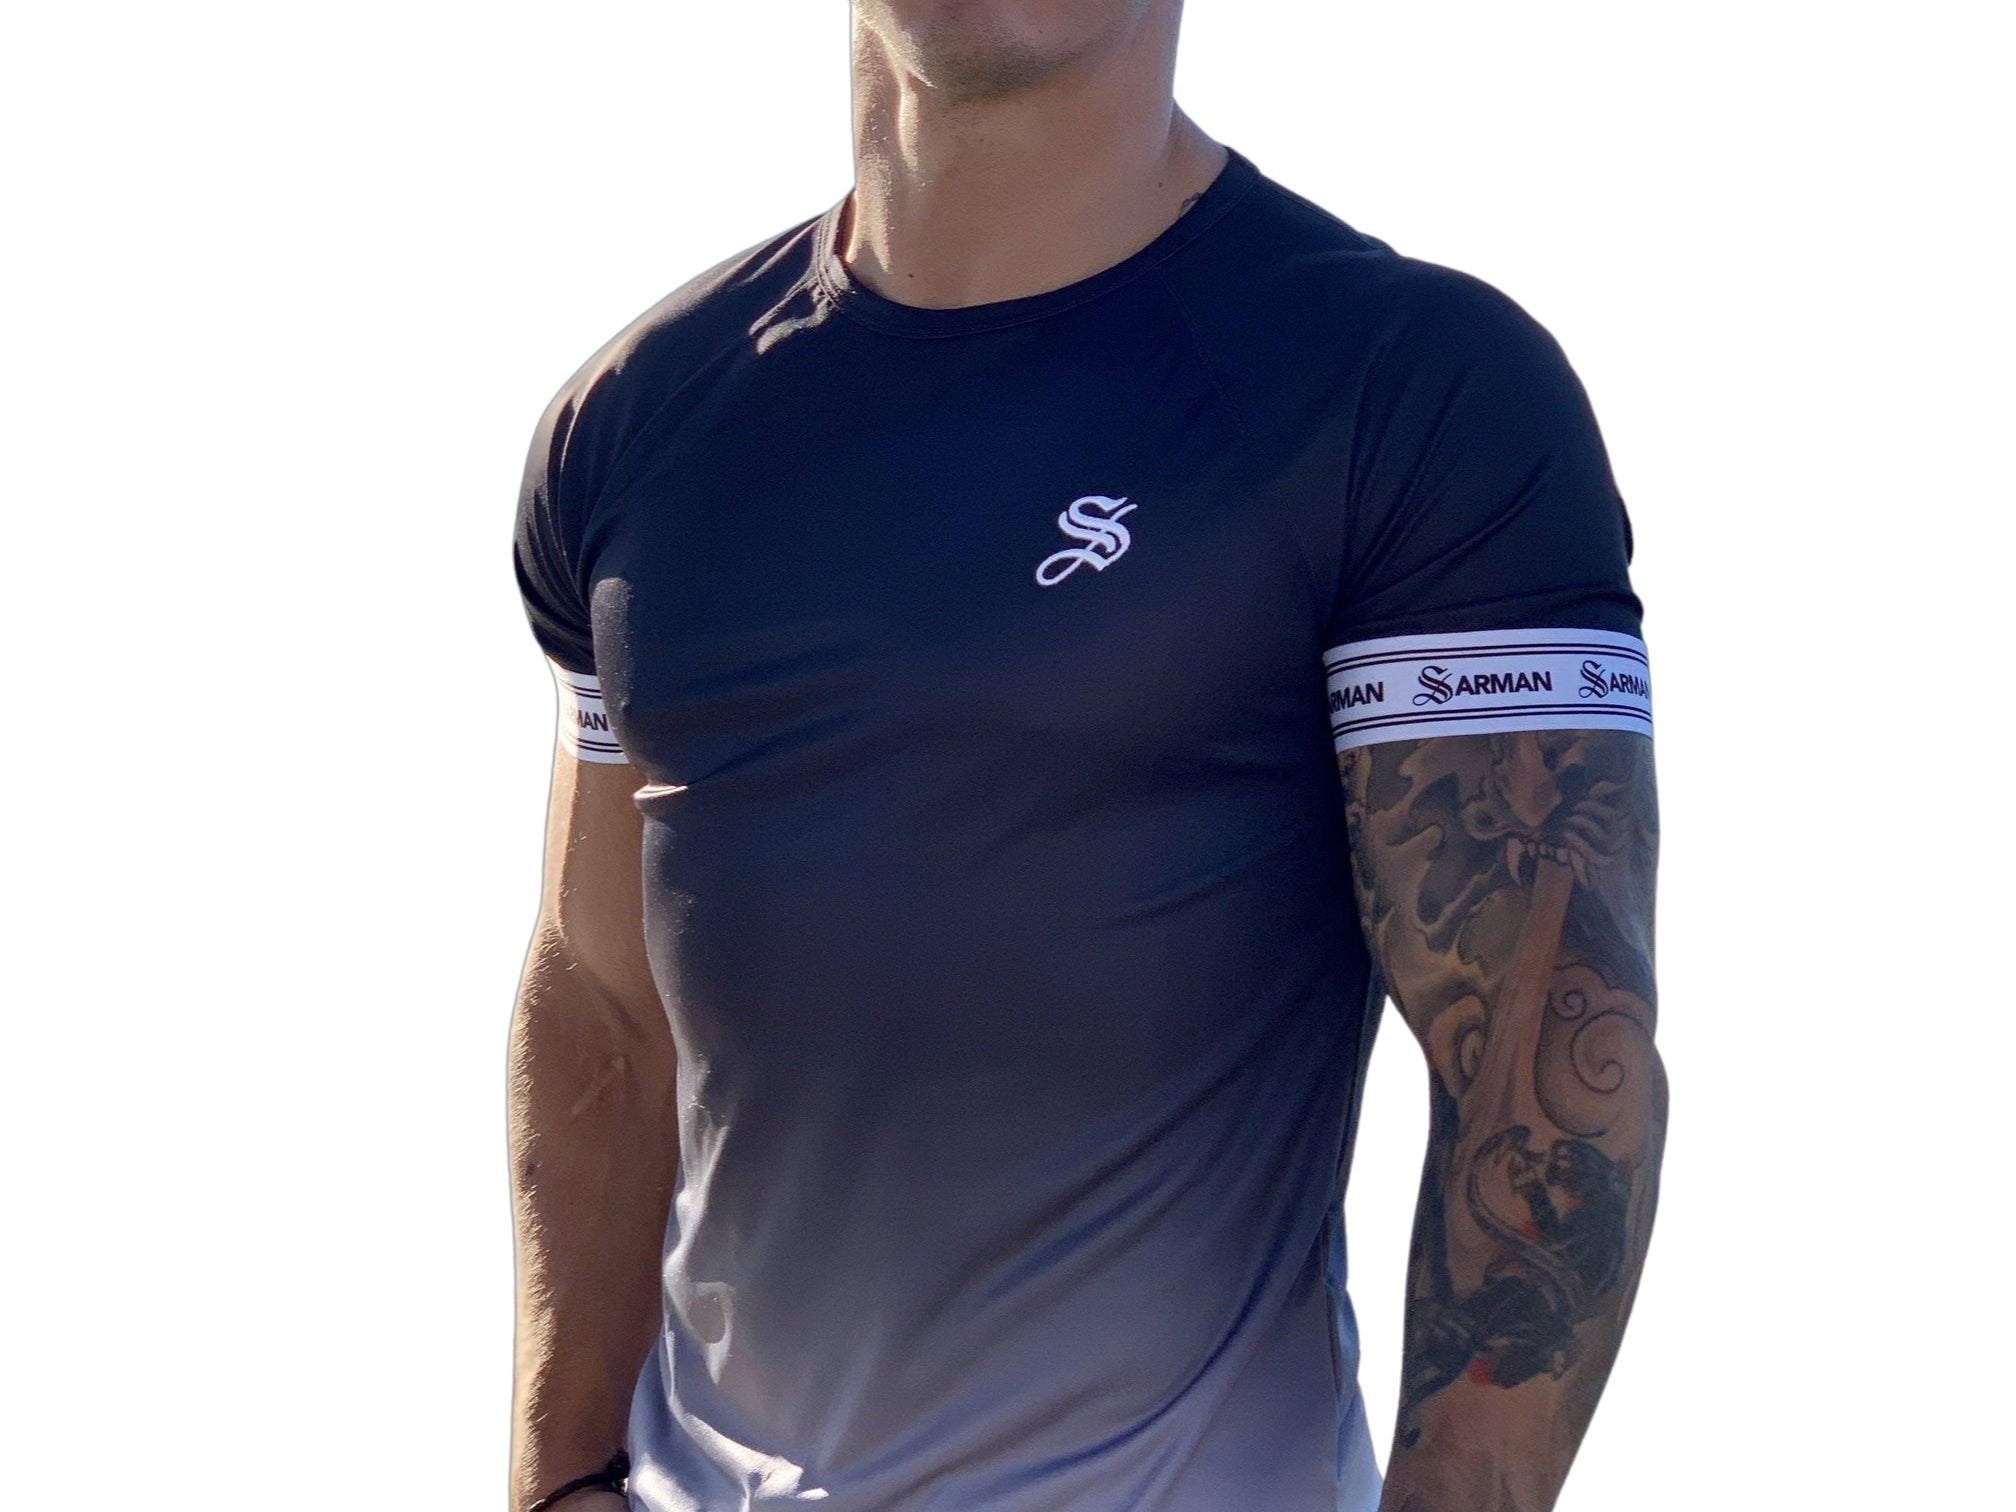 Mikado - Black T-shirt for Men - Sarman Fashion - Wholesale Clothing Fashion Brand for Men from Canada